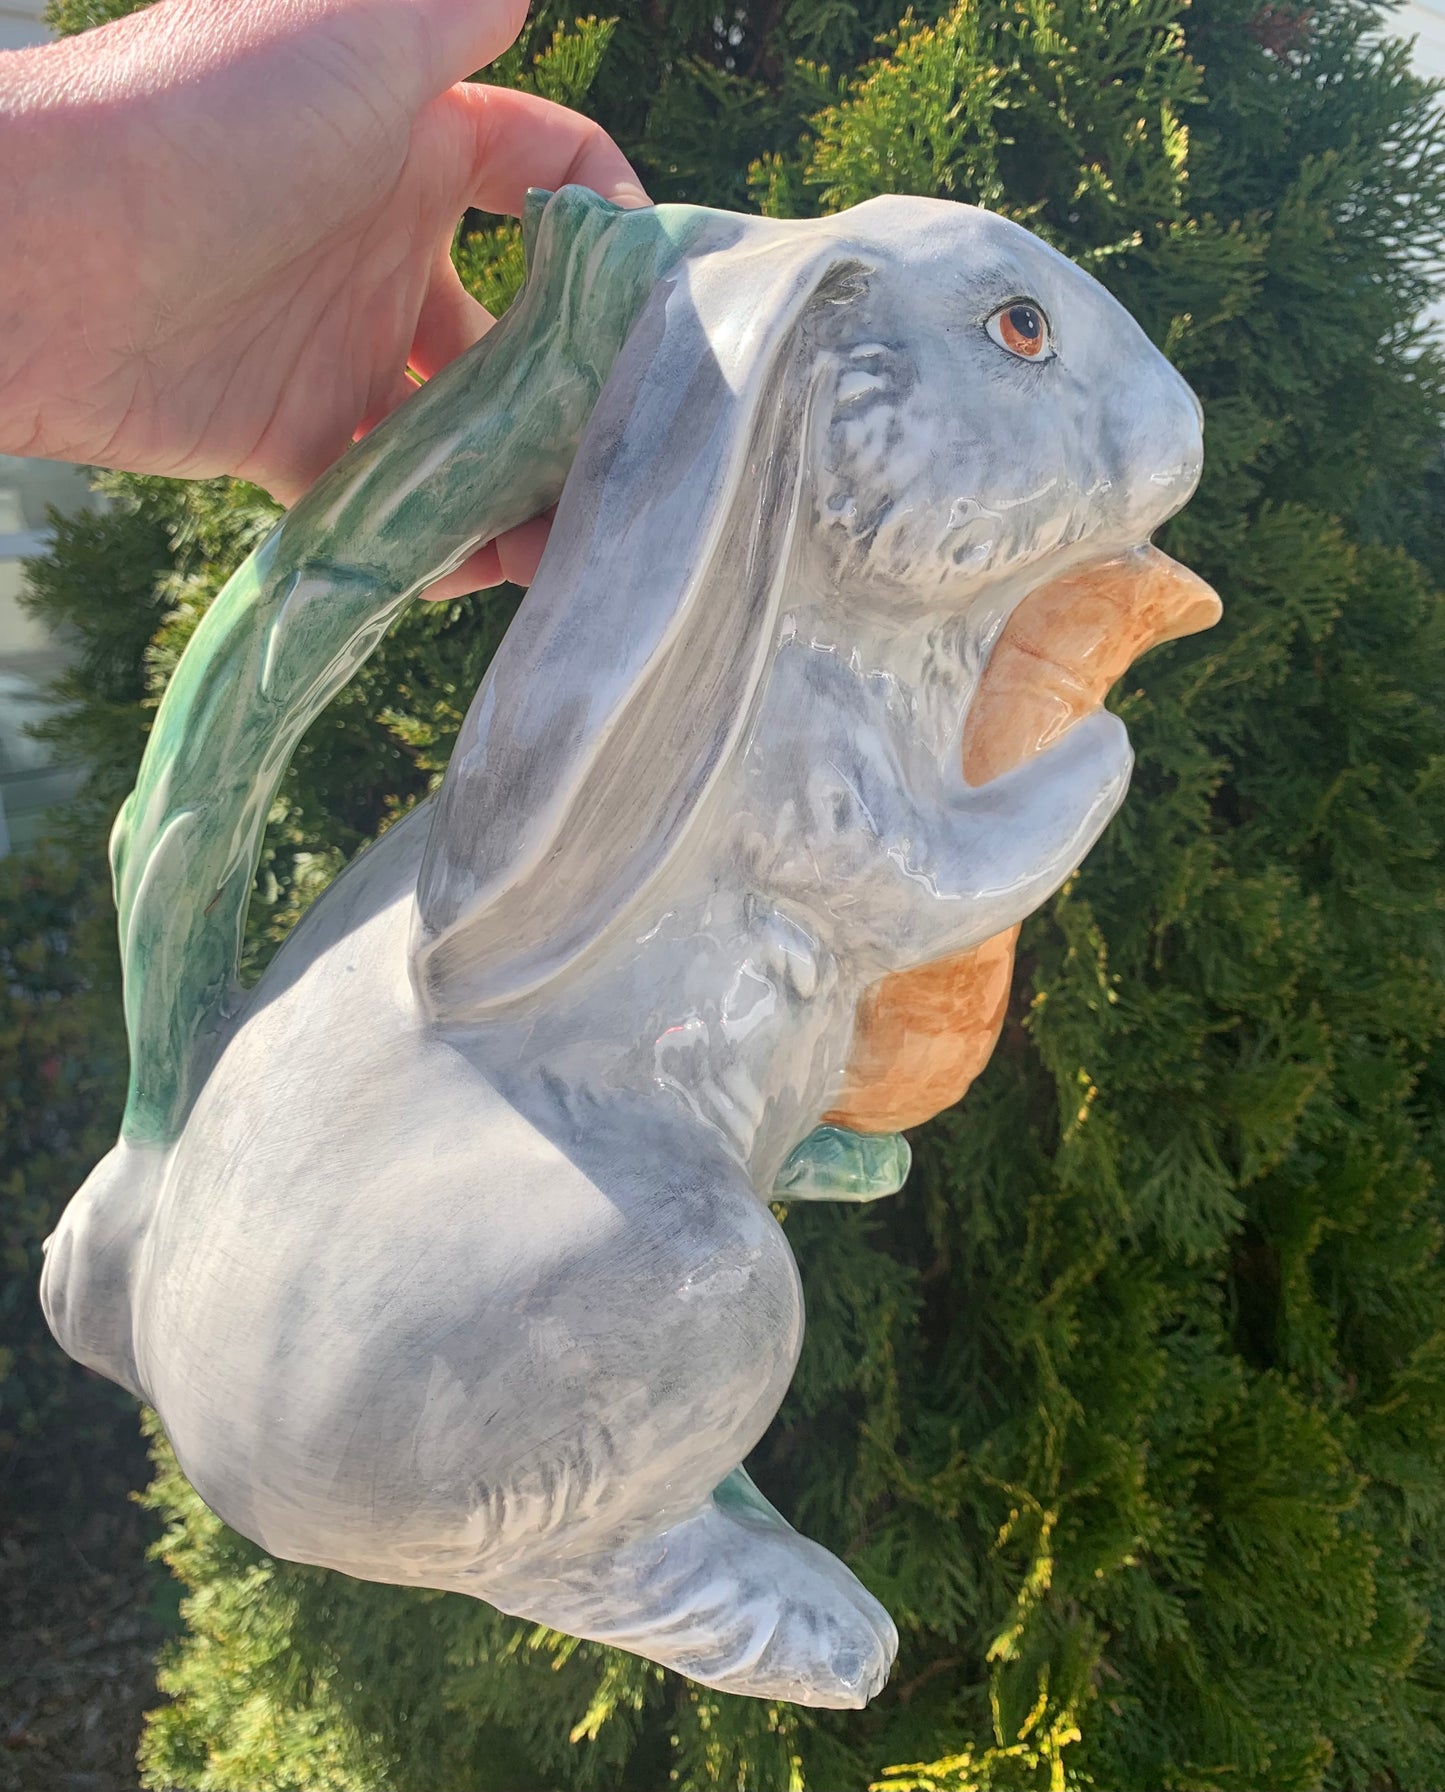 Sweetest Italian floppy eared bunny pitcher!